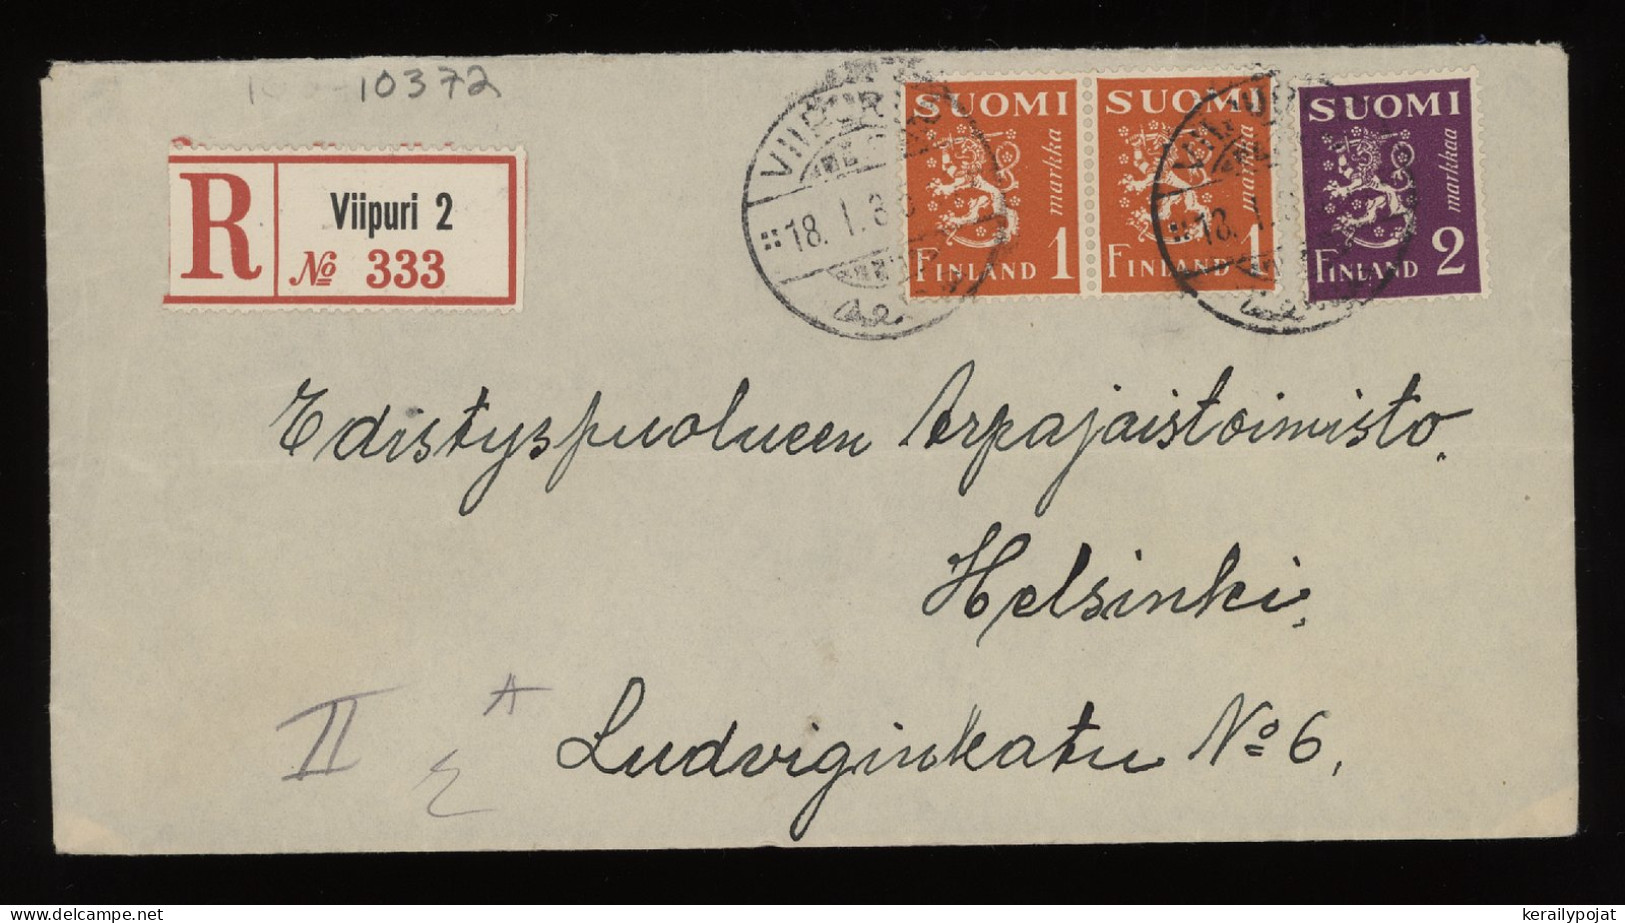 Finland 1935 Viipuri 2 Registered Cover__(10372) - Briefe U. Dokumente